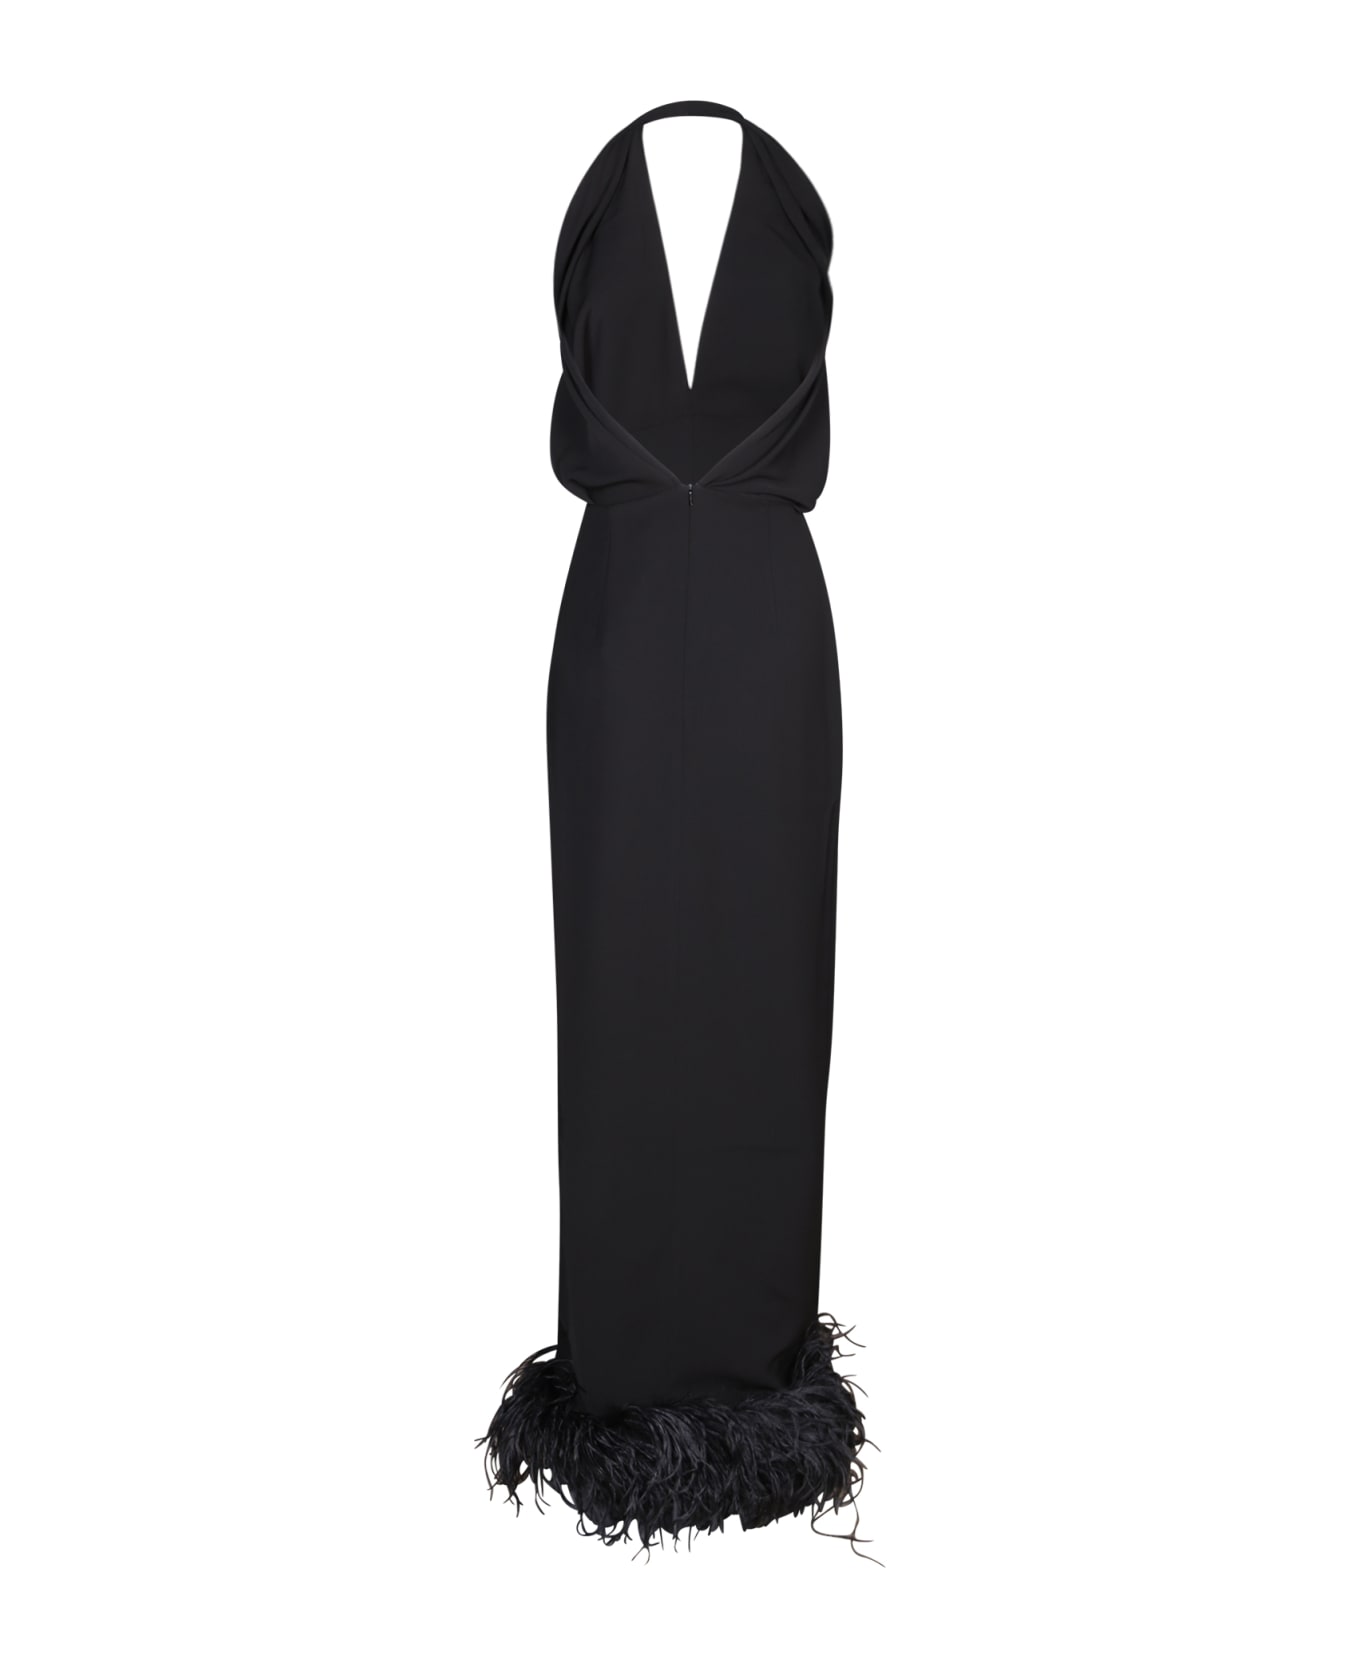 16arlington Isolde Black Dress - Black ジャンプスーツ